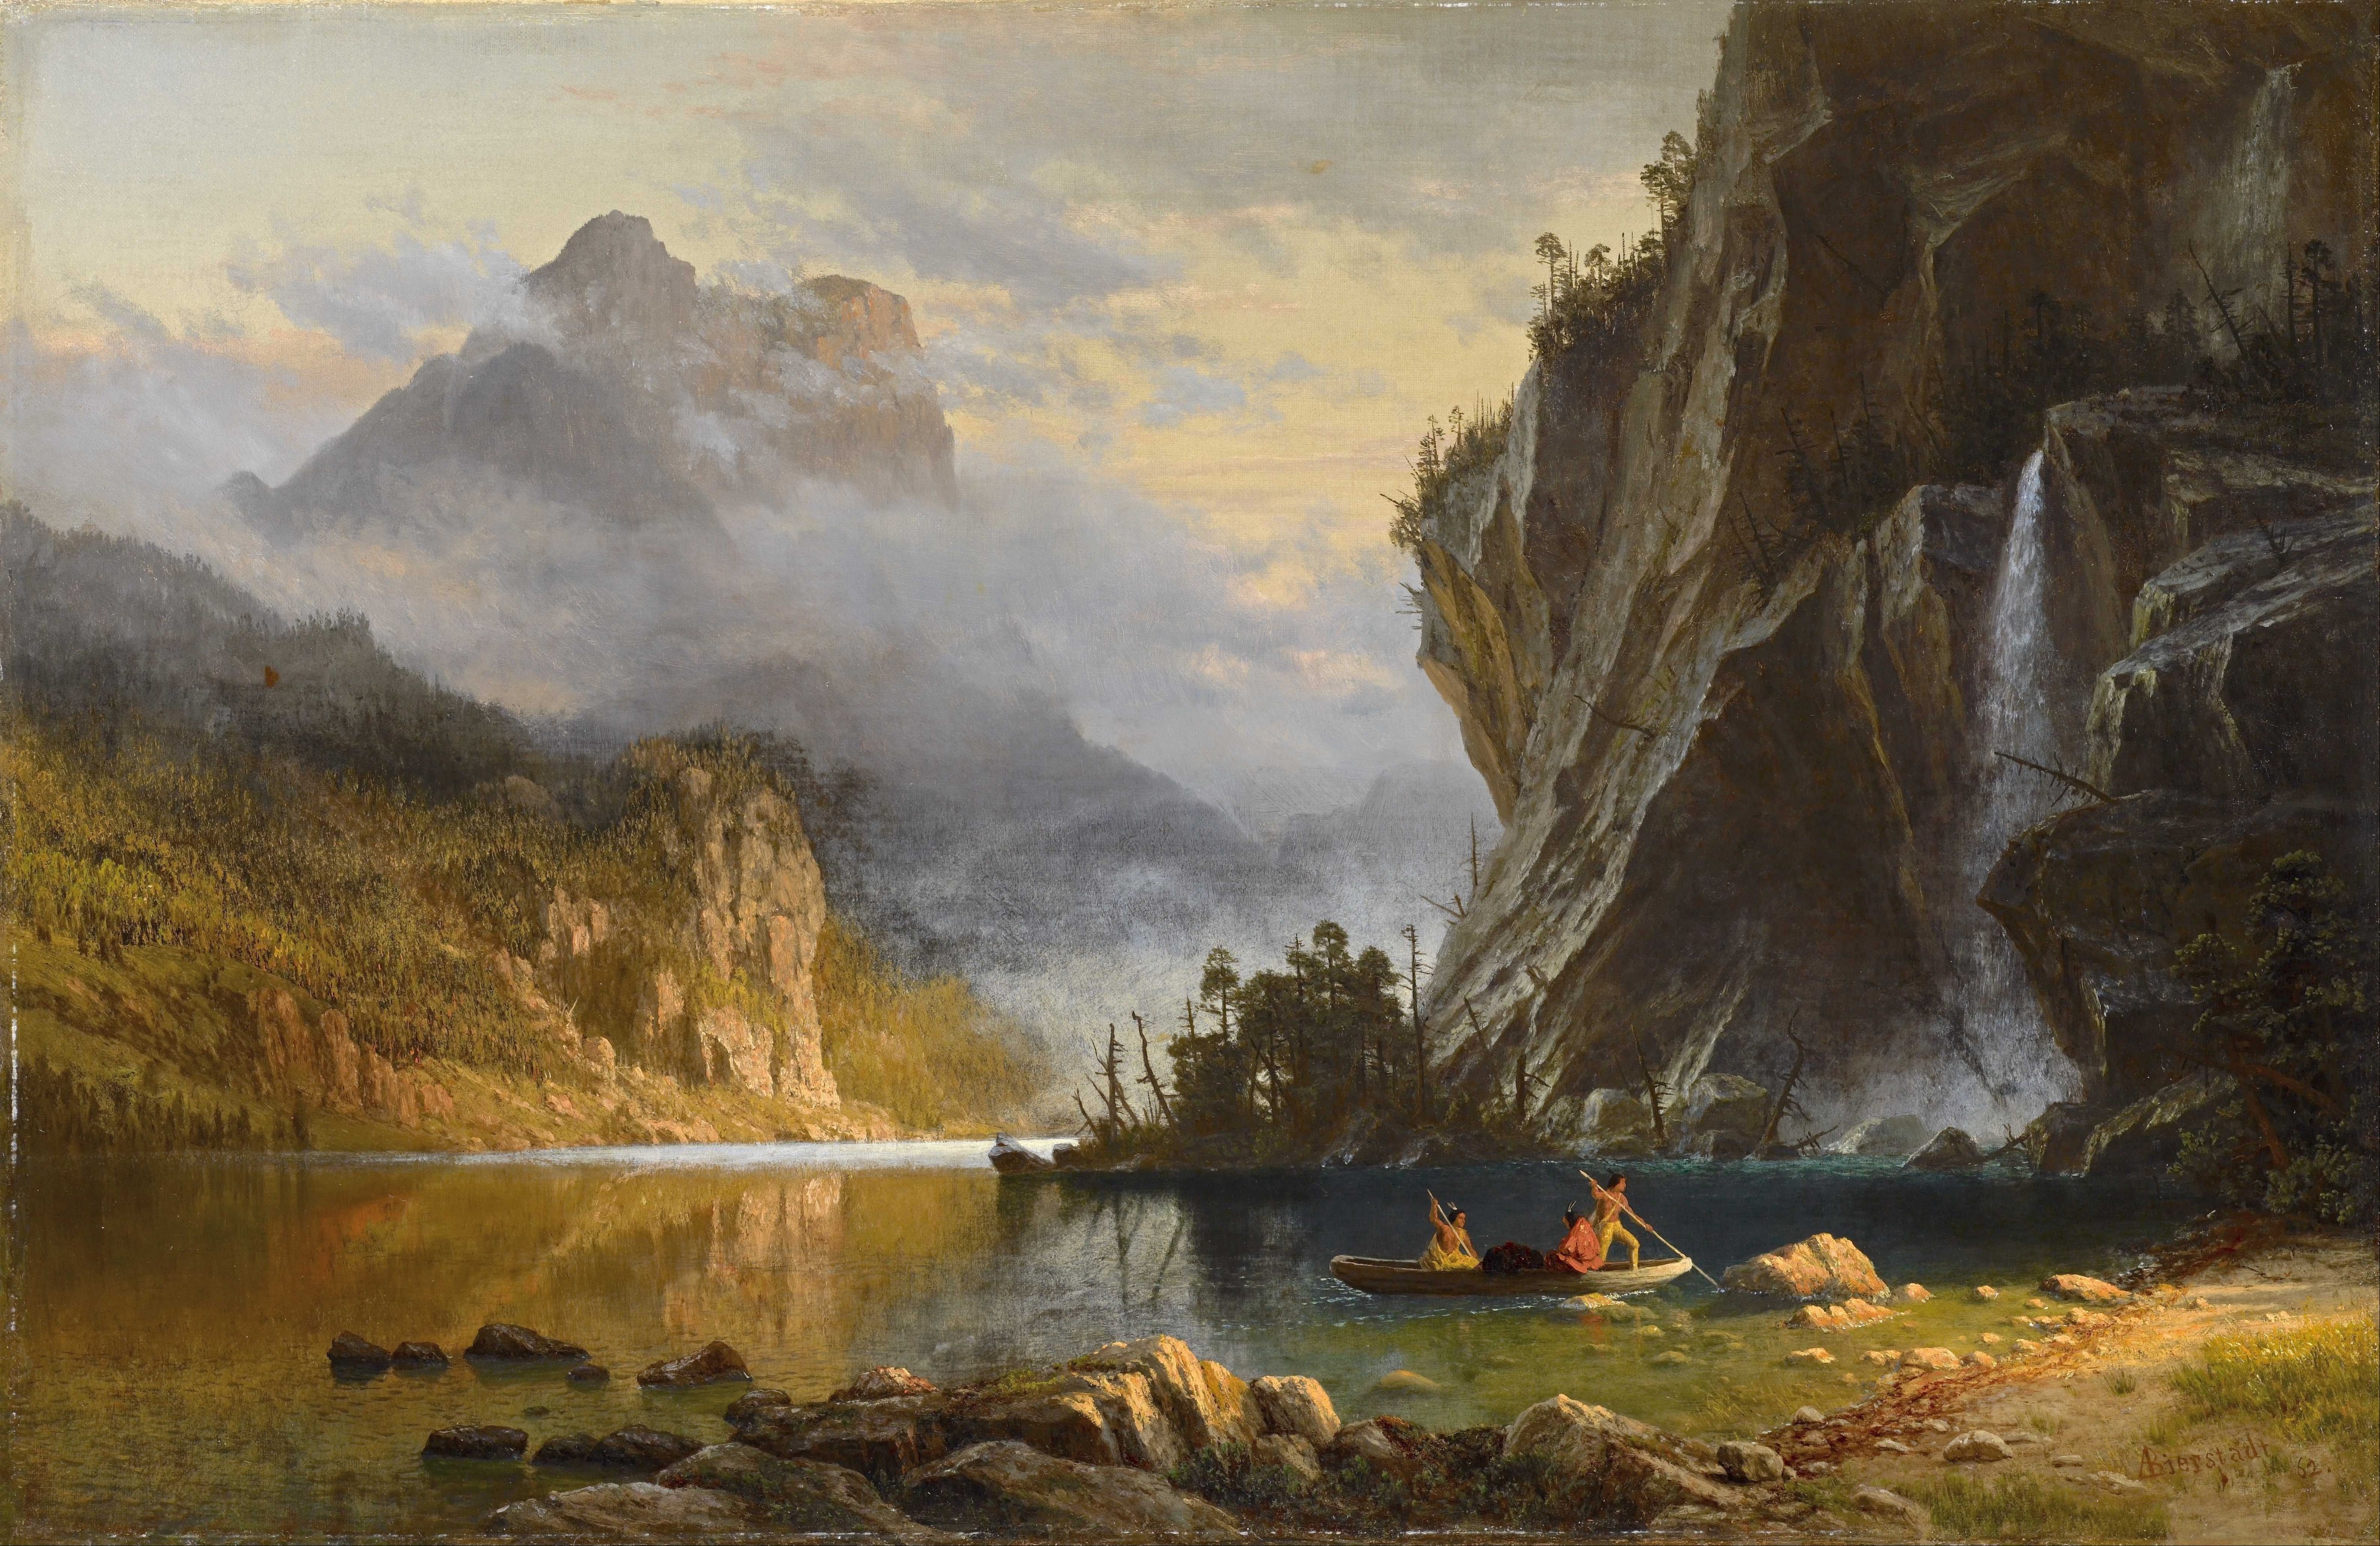 Albert Bierstadt - Indians Spear Fishing - Google Art Project